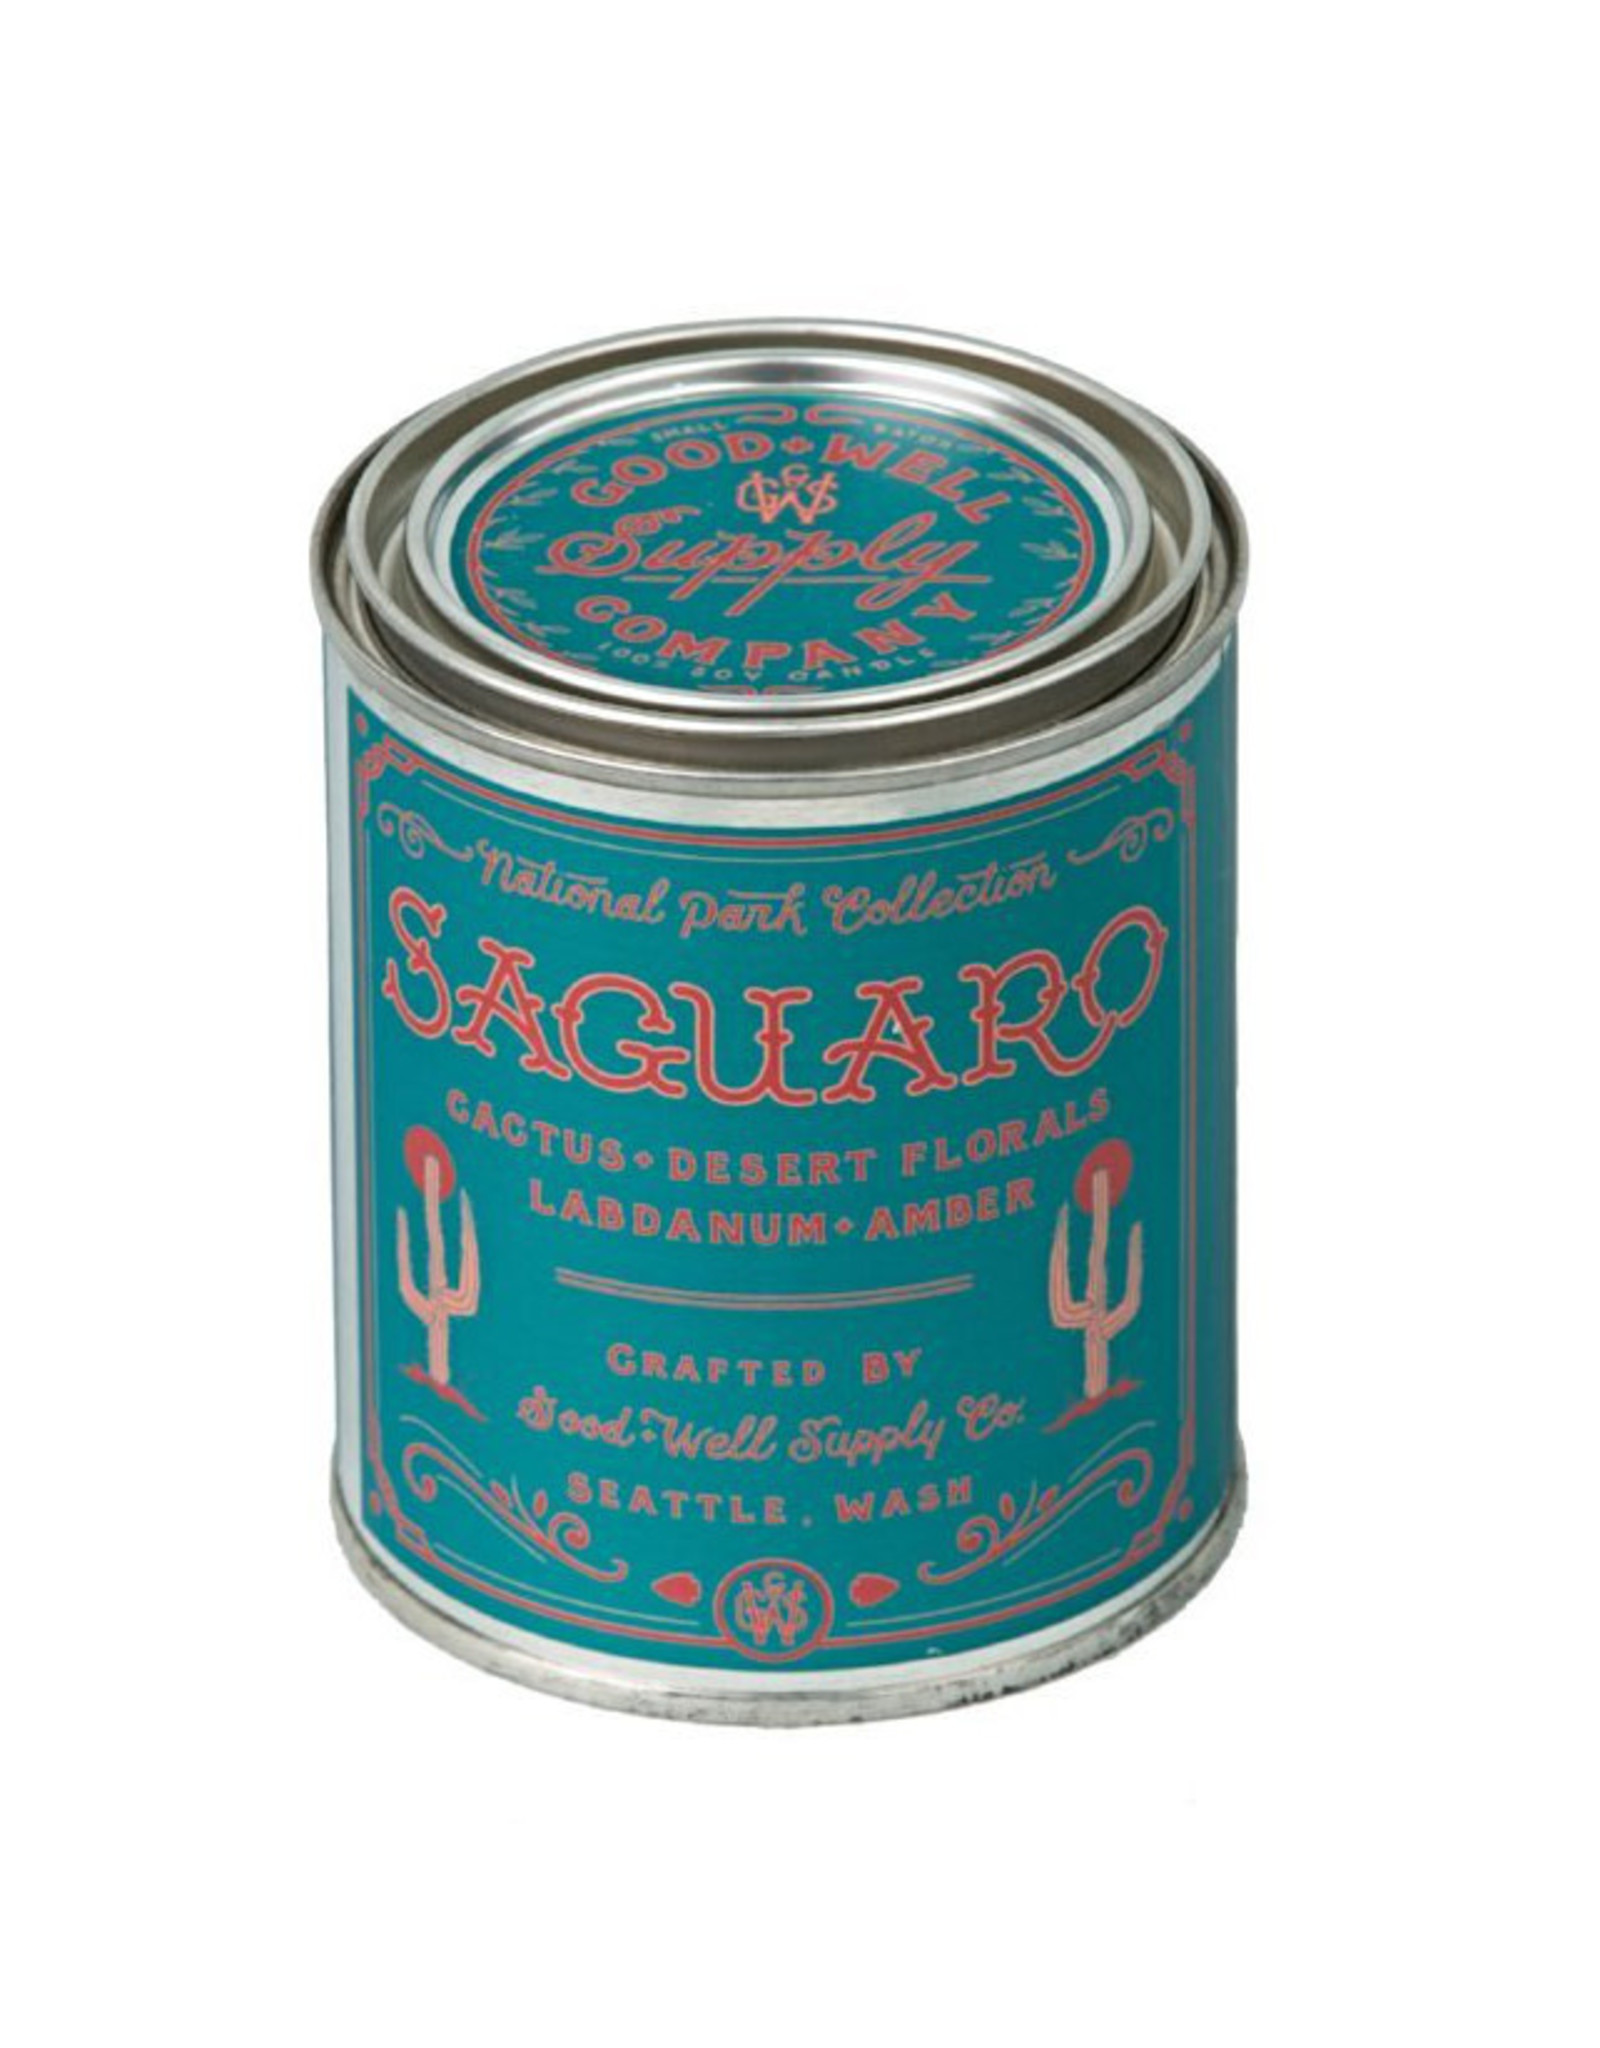 Good & Well Supply Co. Saguaro Half Pint Candle - Cactus, Desert Florals, Labdanum & Amber